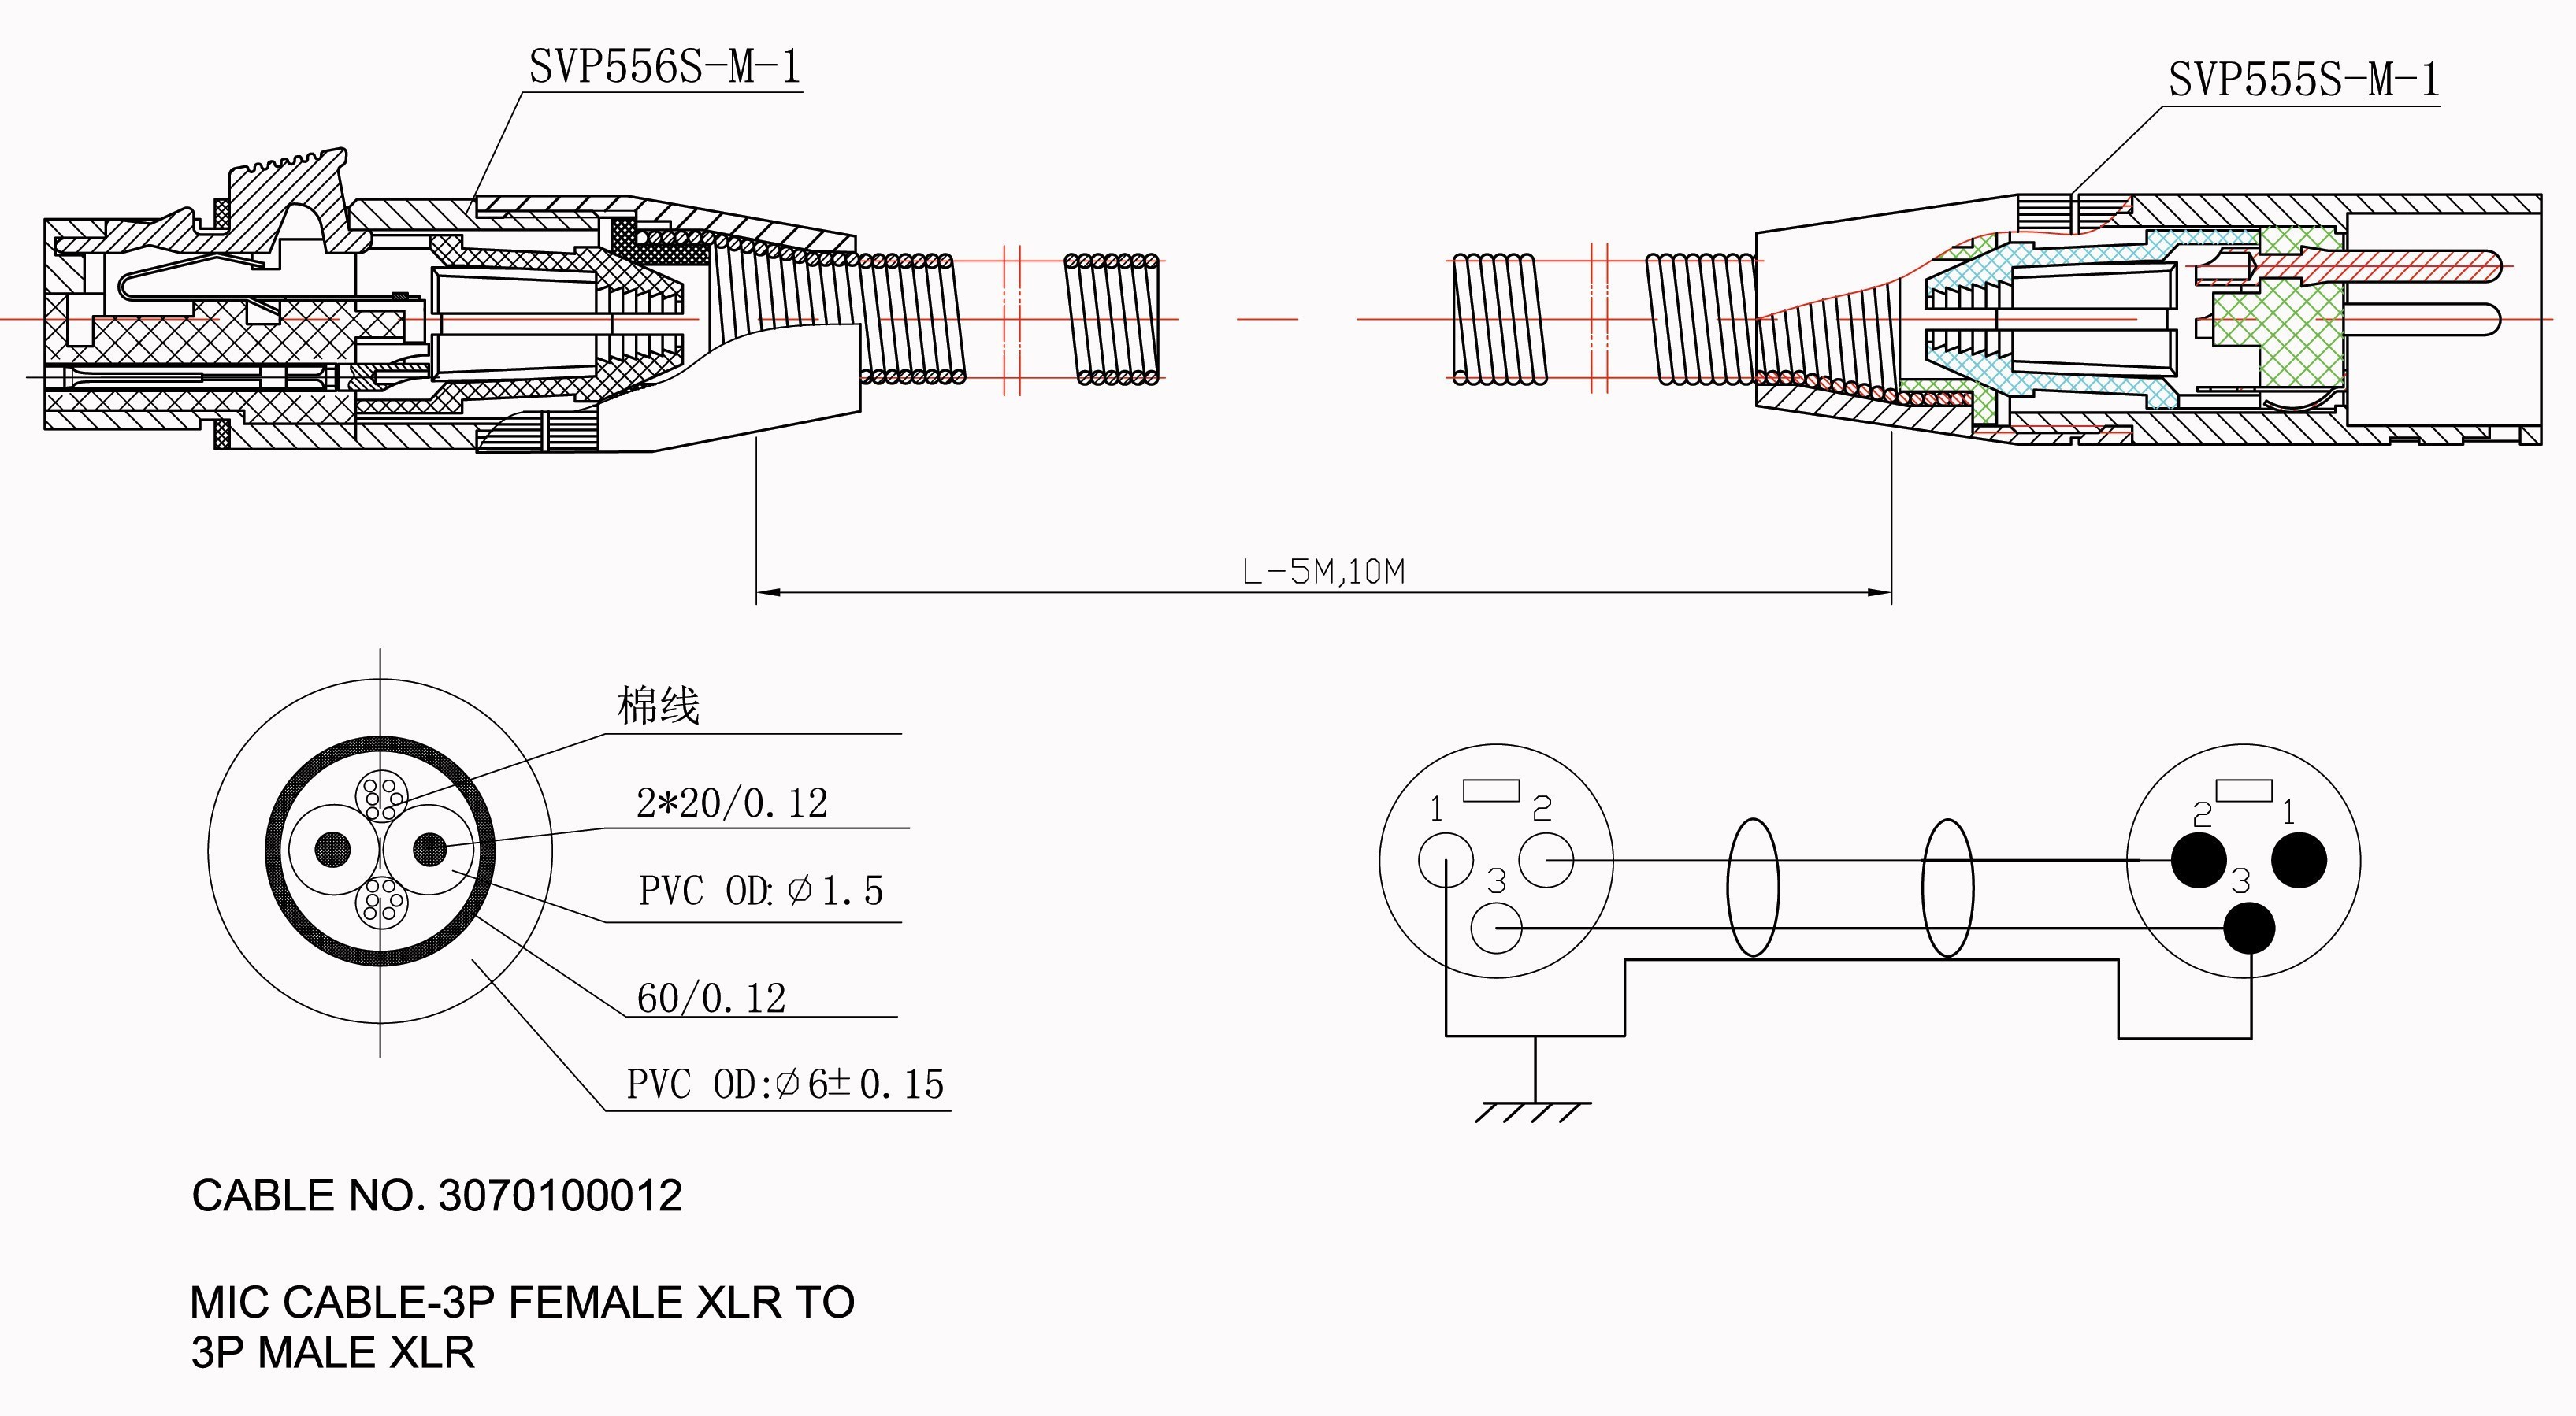 Isuzu Trooper Engine Diagram Xy Alternator Wiring Diagram Refrence isuzu Trooper Wiring Diagram Of Isuzu Trooper Engine Diagram